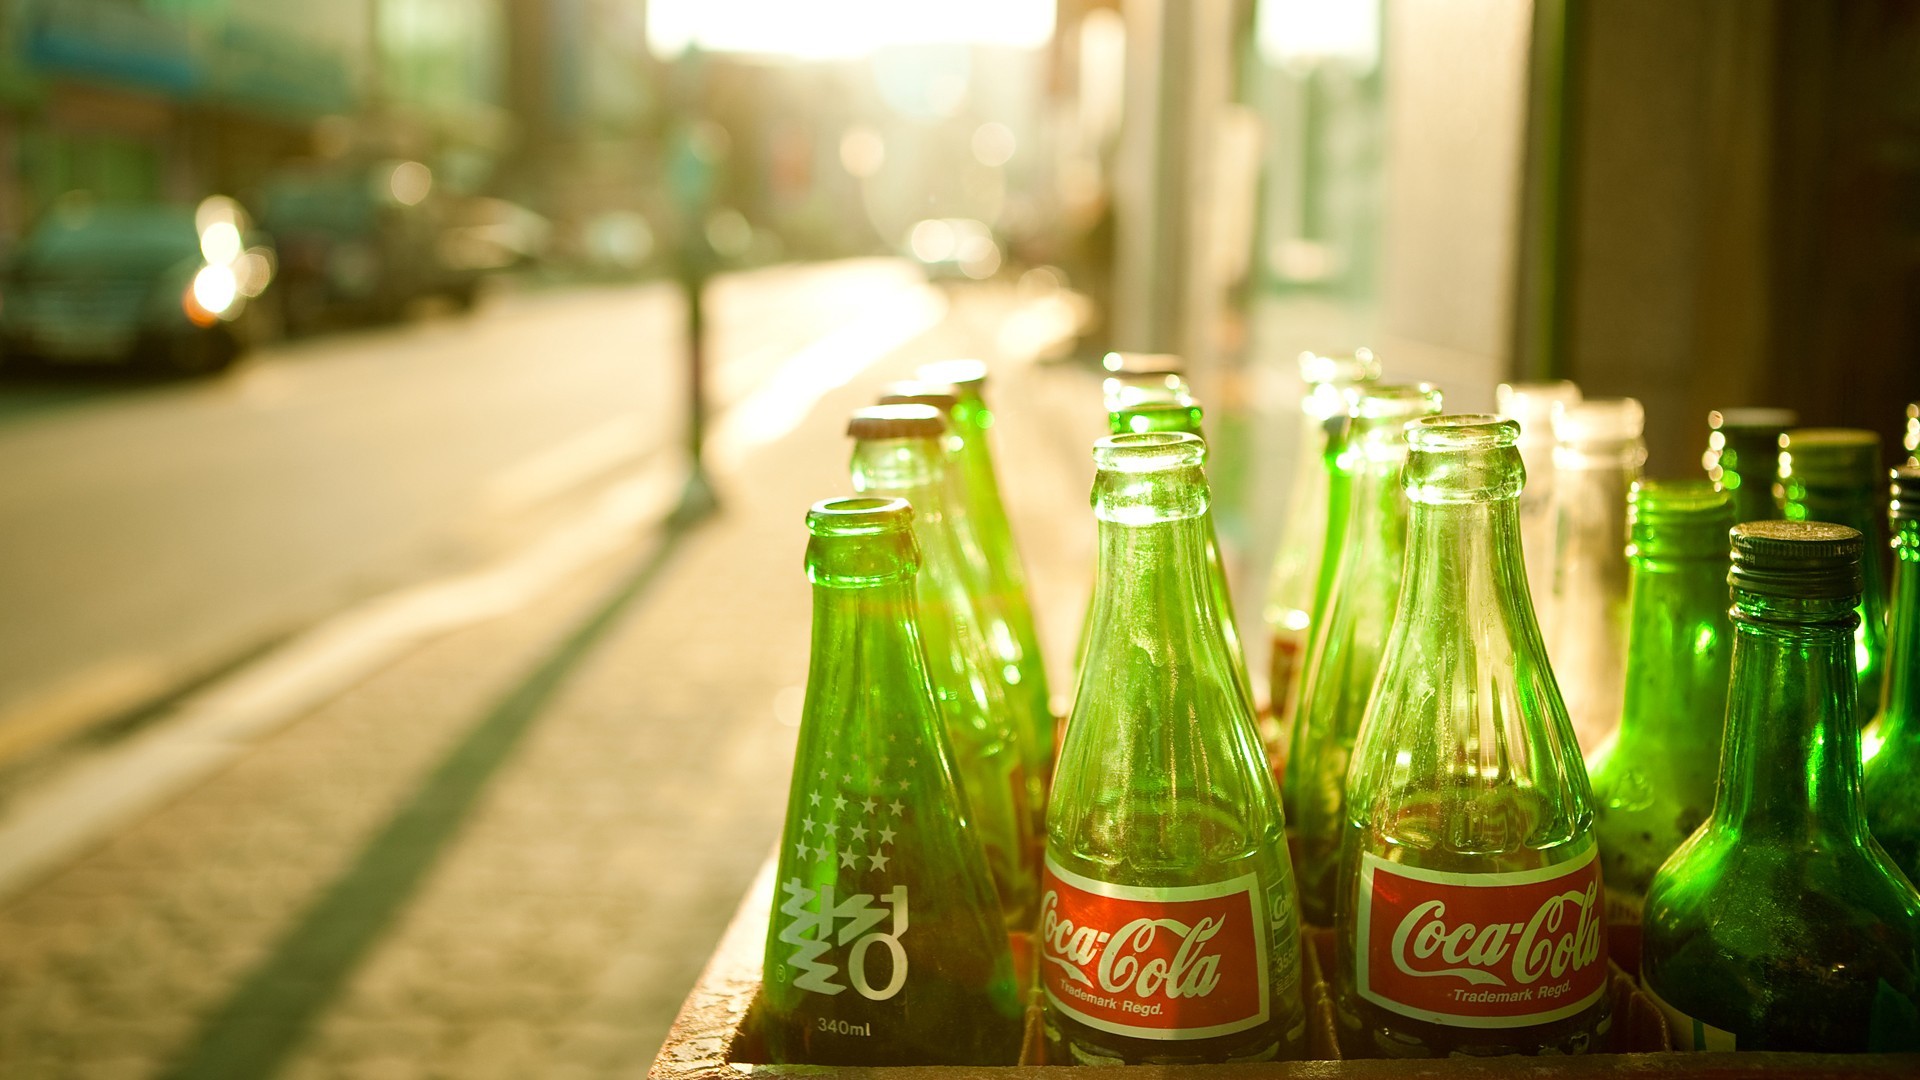 General 1920x1080 Coca-Cola bottles urban logo street sunlight brand